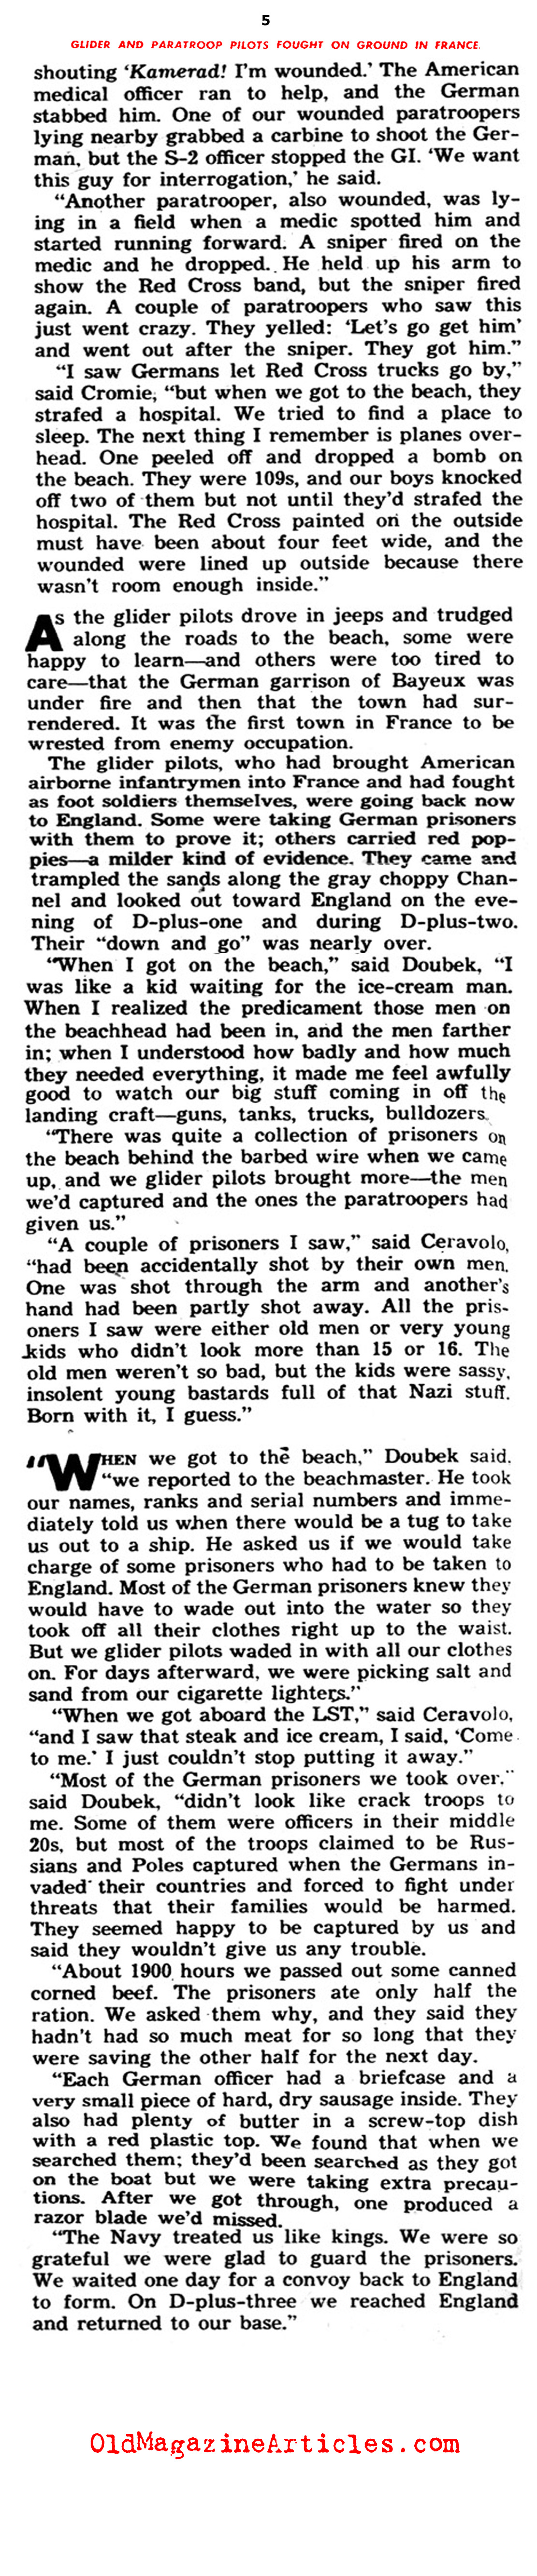 Four Glider Pilots on D-Day (Yank Magazine, 1944)